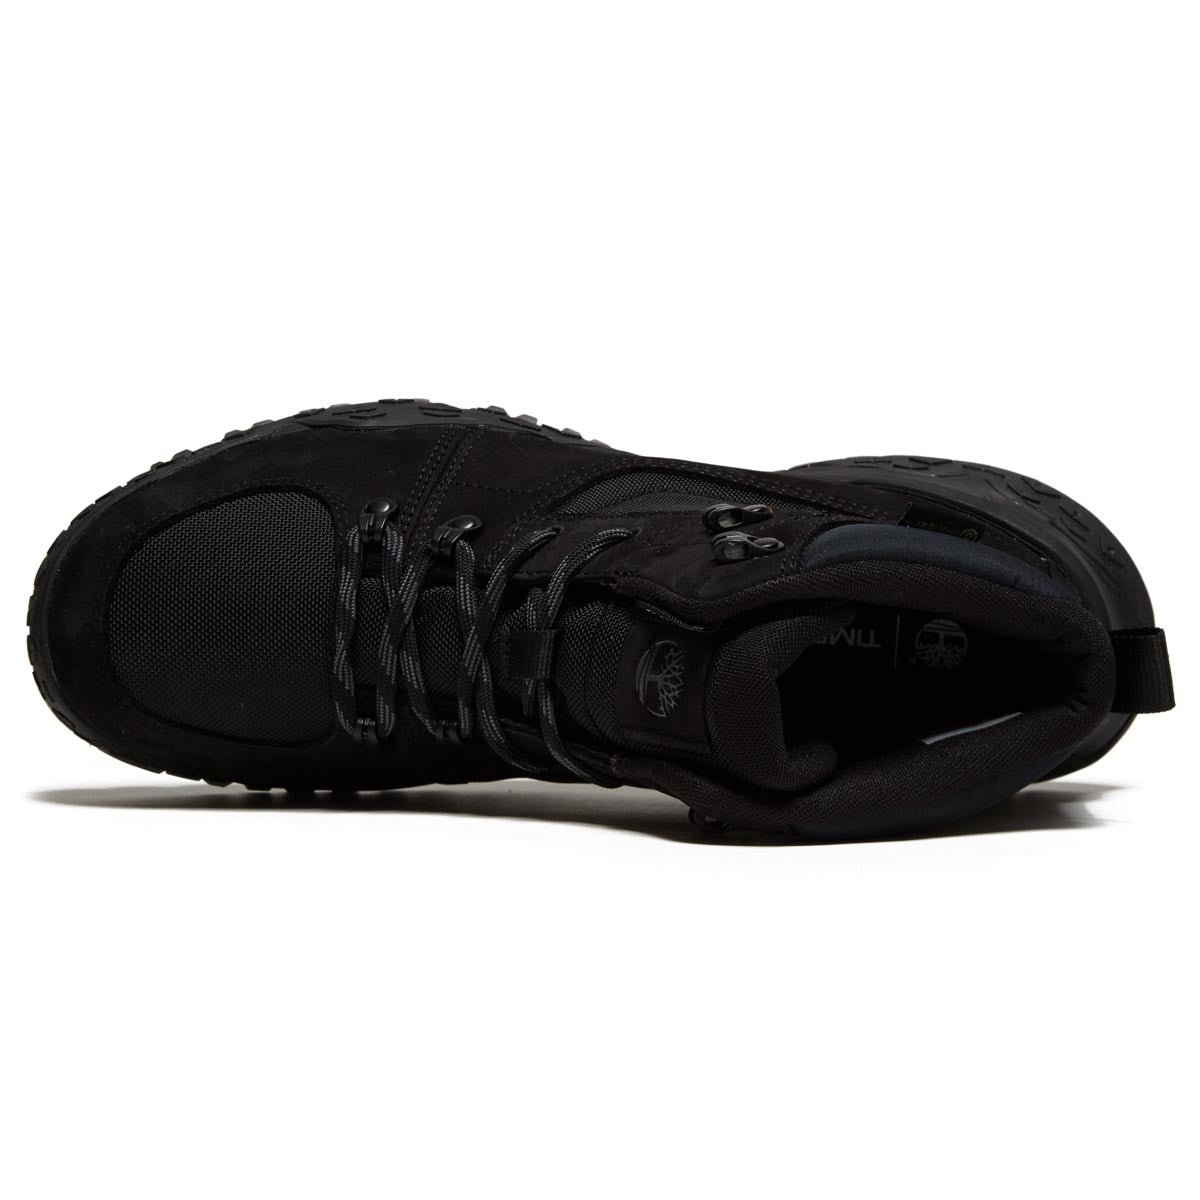 Timberland Motion Scramble Mid Lace Up Wp Shoes - Black Nubuck image 3